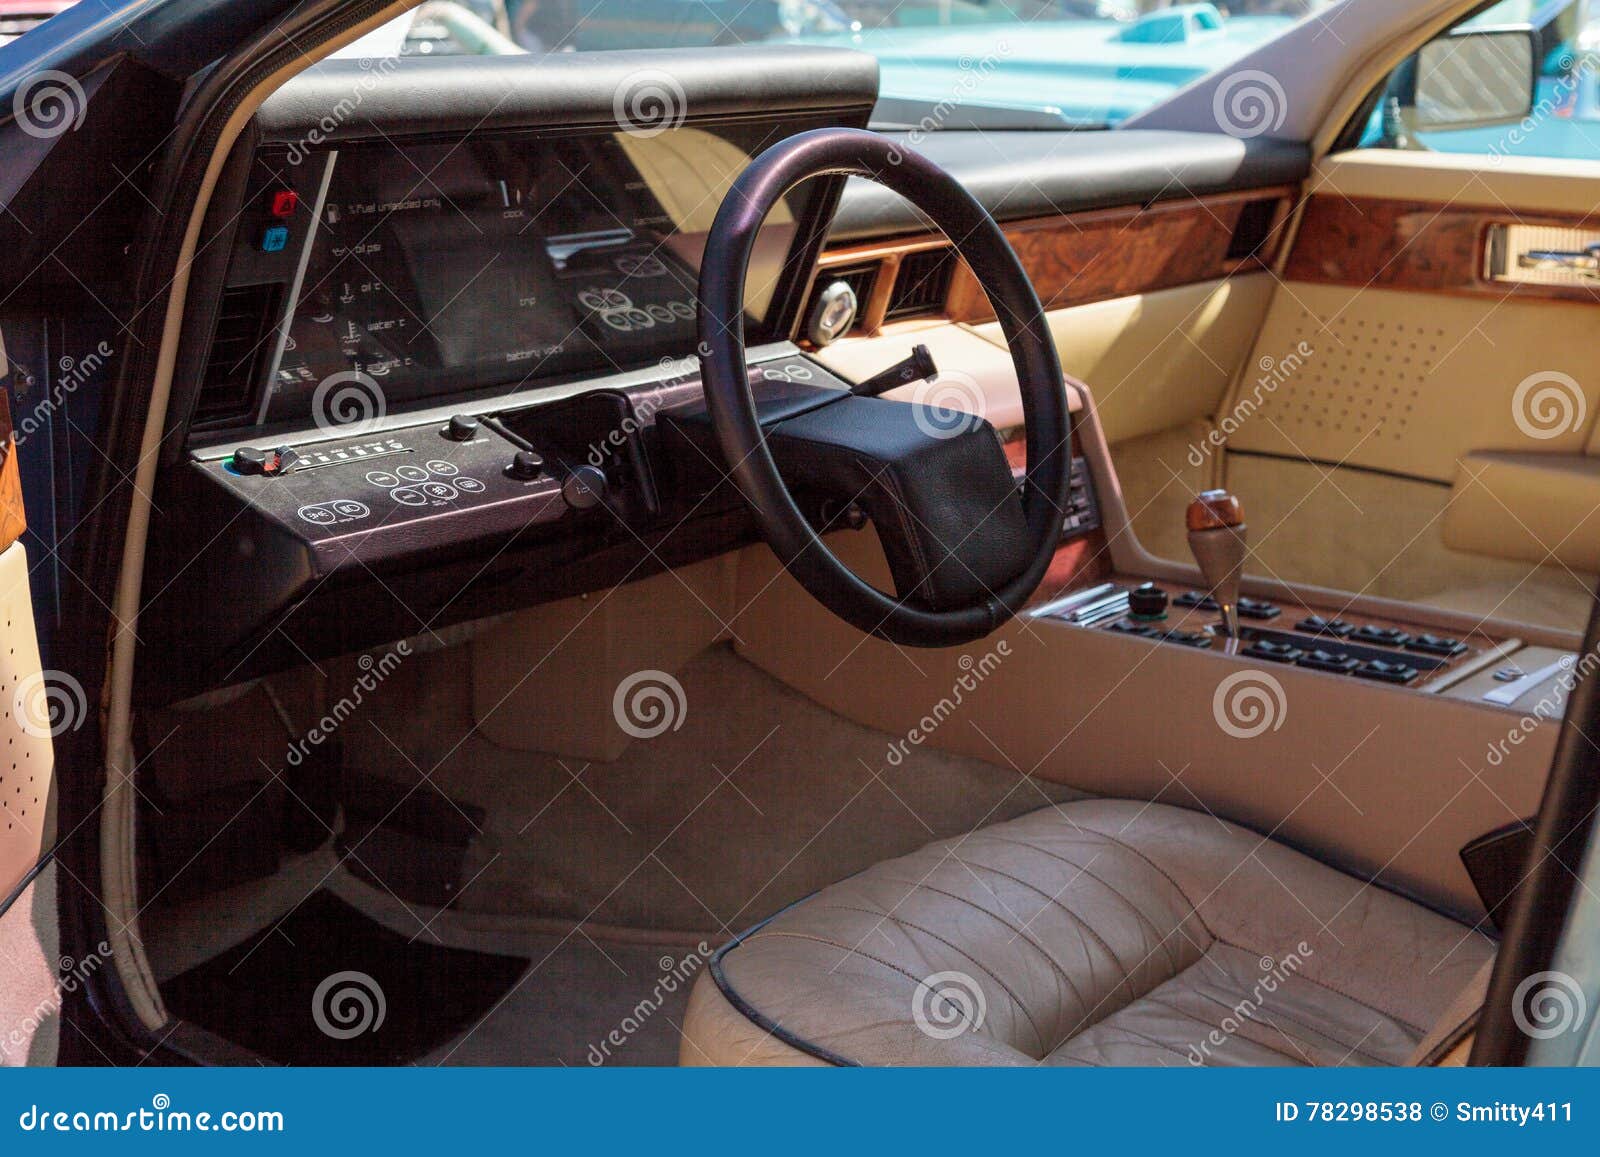 Aston Martin Lagonda interior revealed